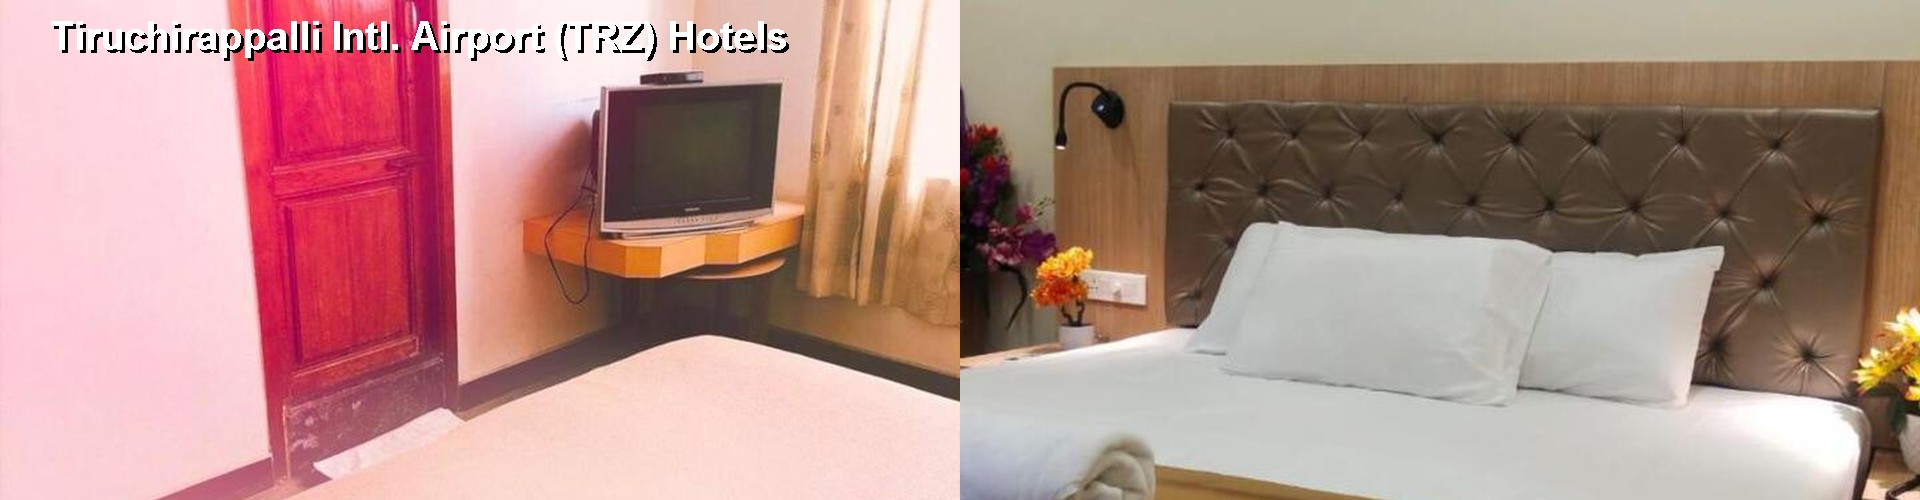 4 Best Hotels near Tiruchirappalli Intl. Airport (TRZ)